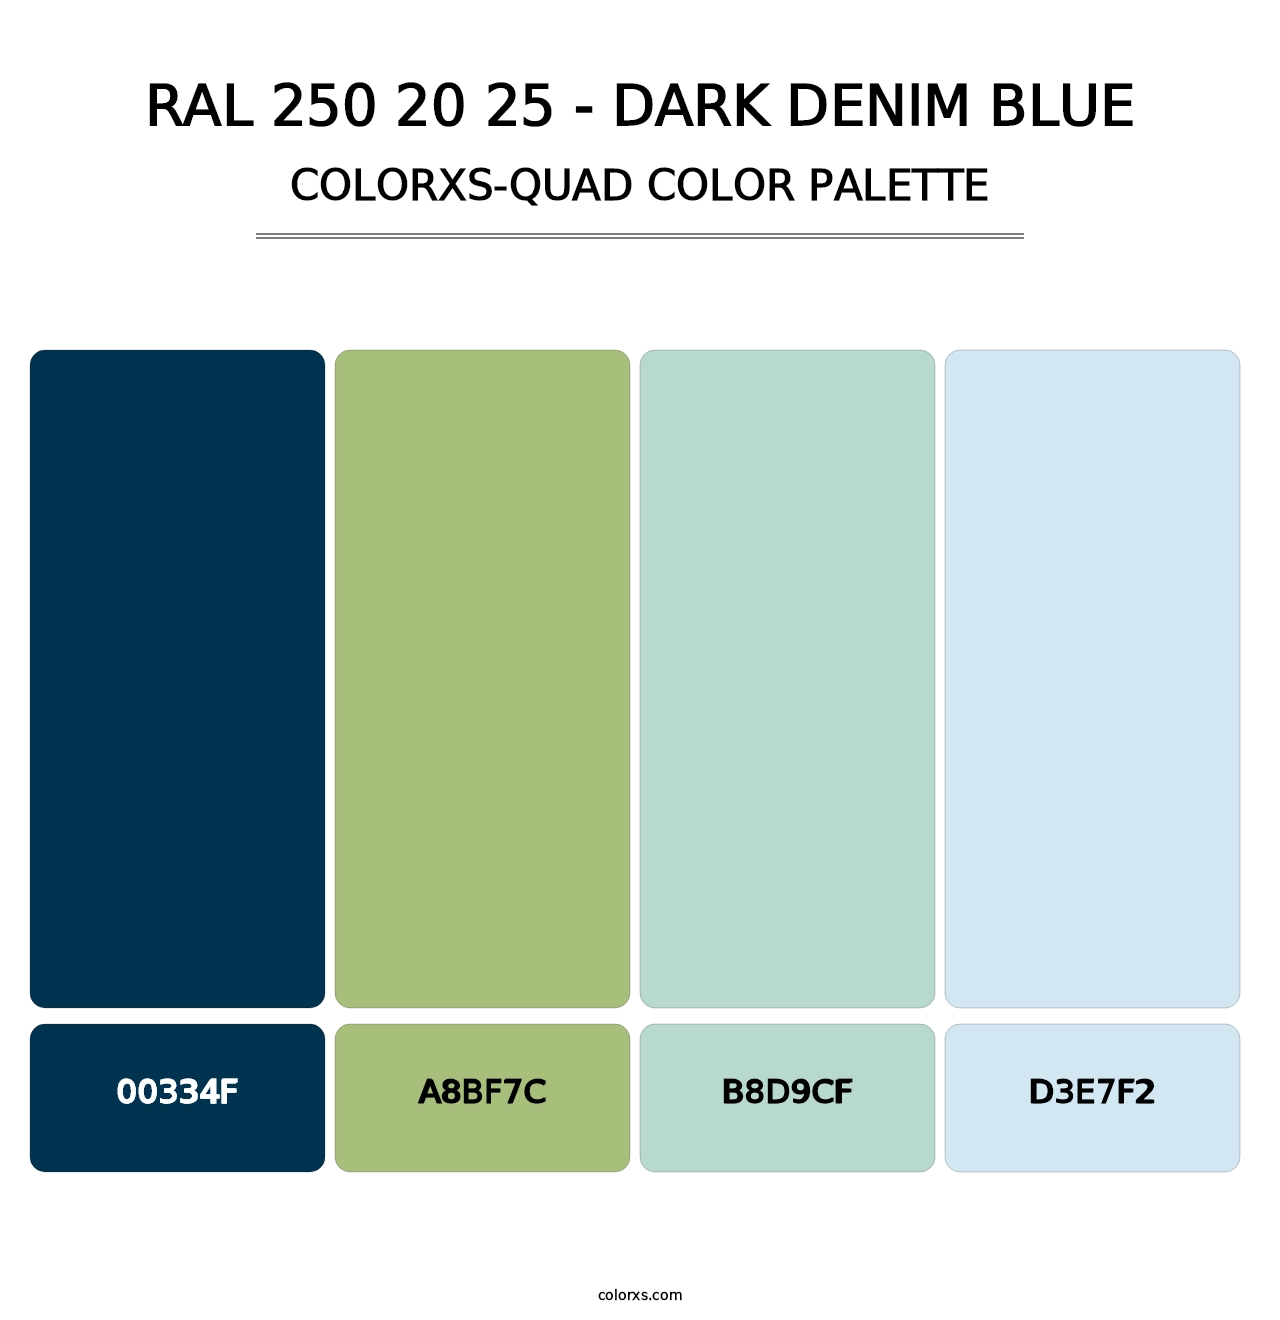 RAL 250 20 25 - Dark Denim Blue - Colorxs Quad Palette